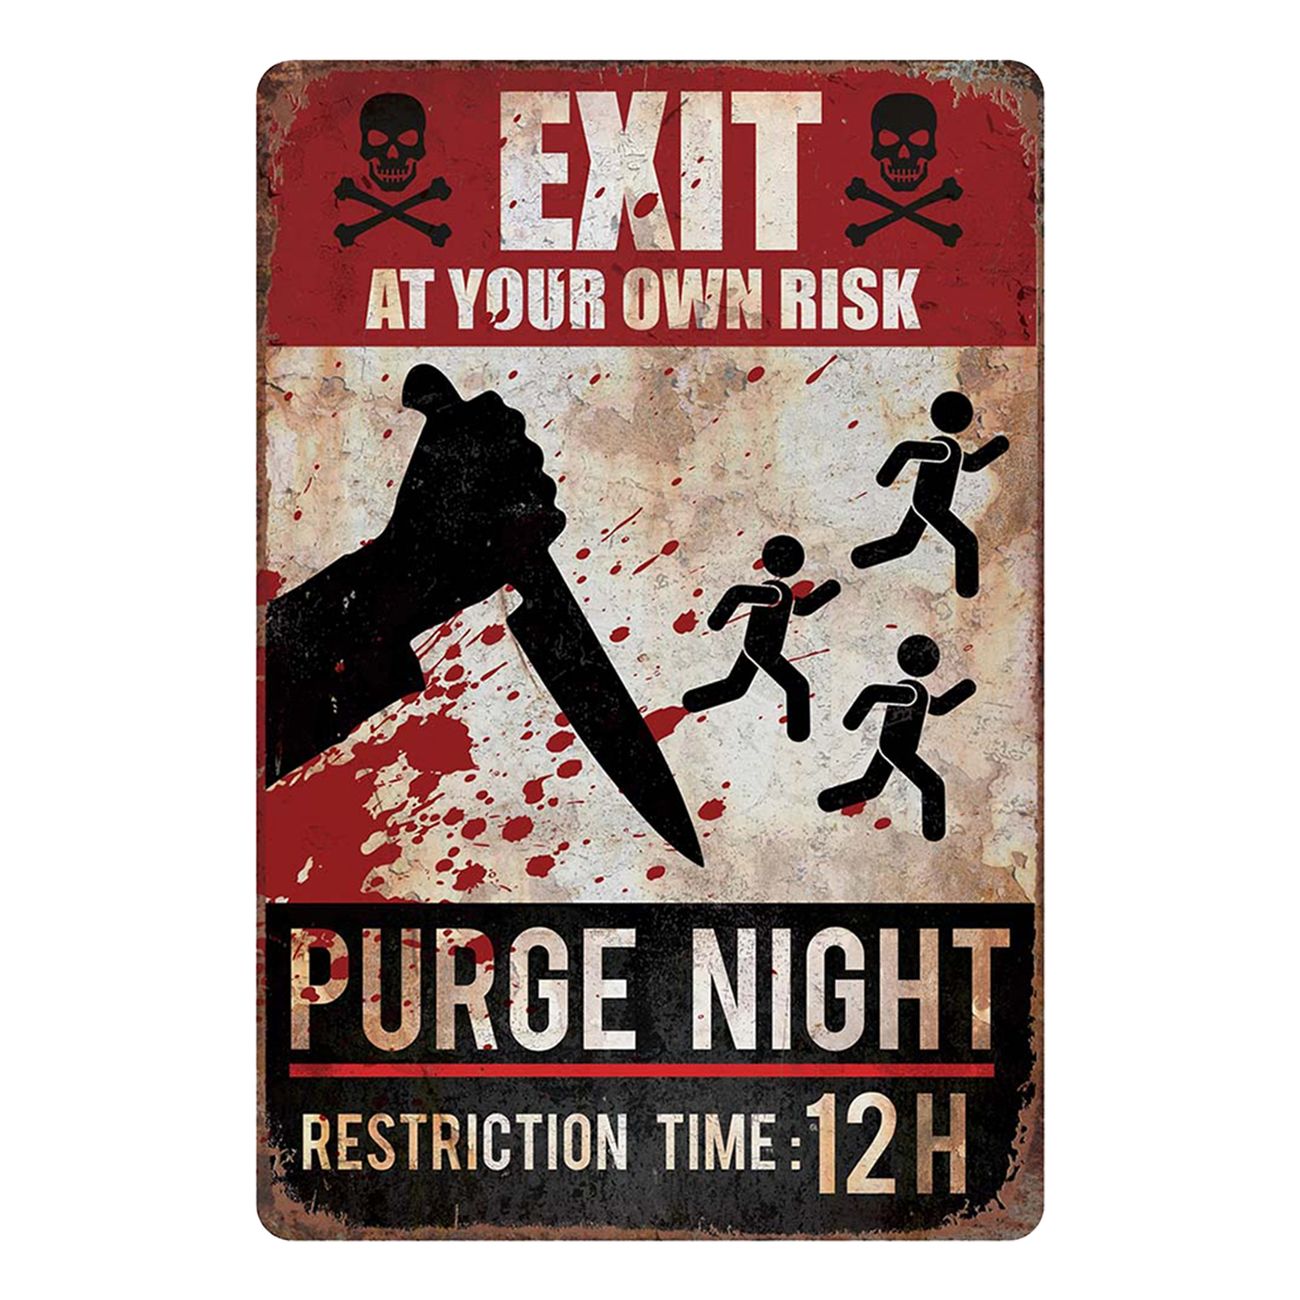 skylt-purge-night-89276-1